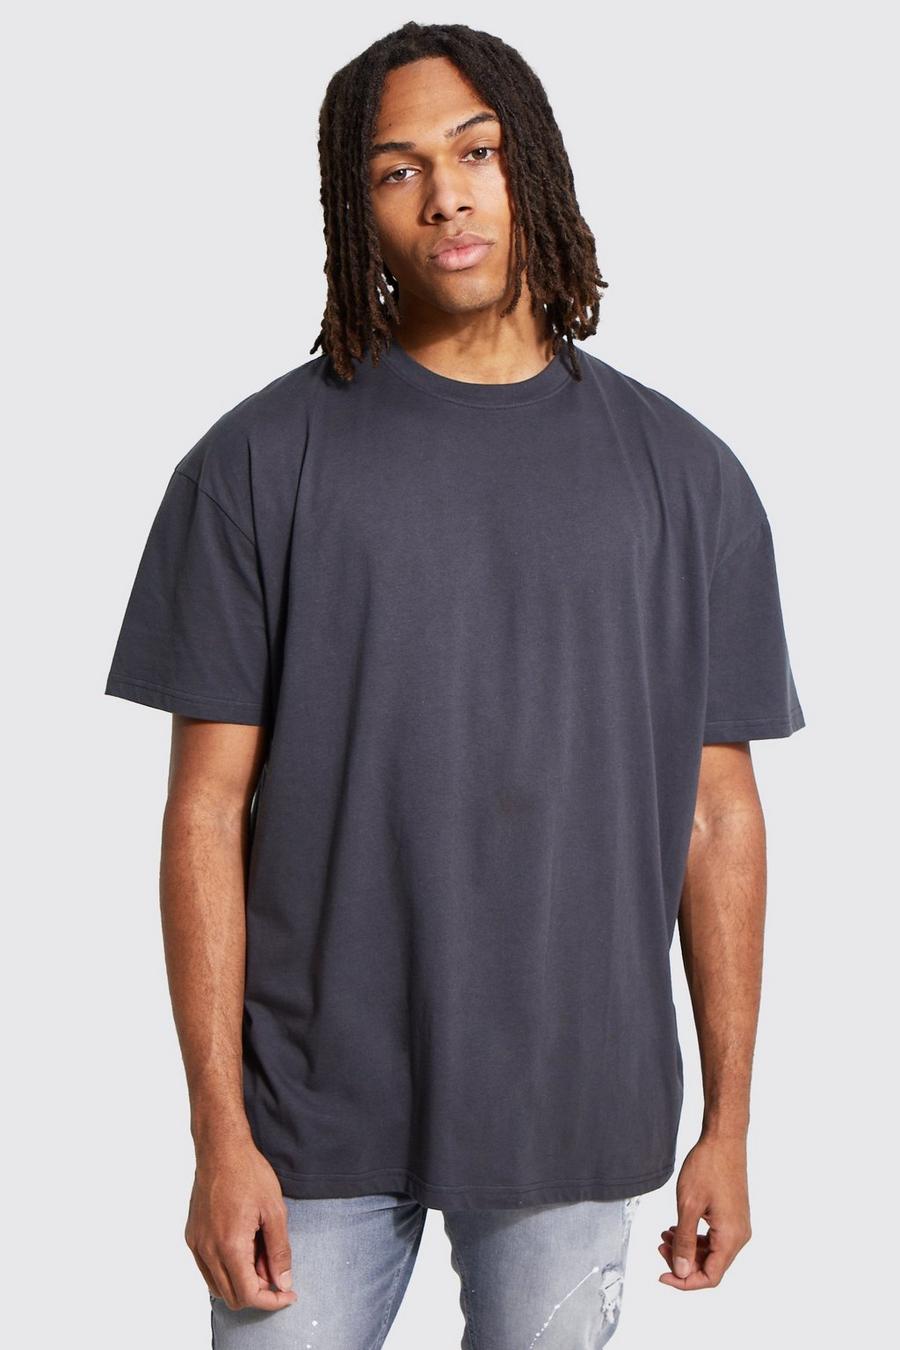 Charcoal gris Oversized Crew Neck T-Shirt